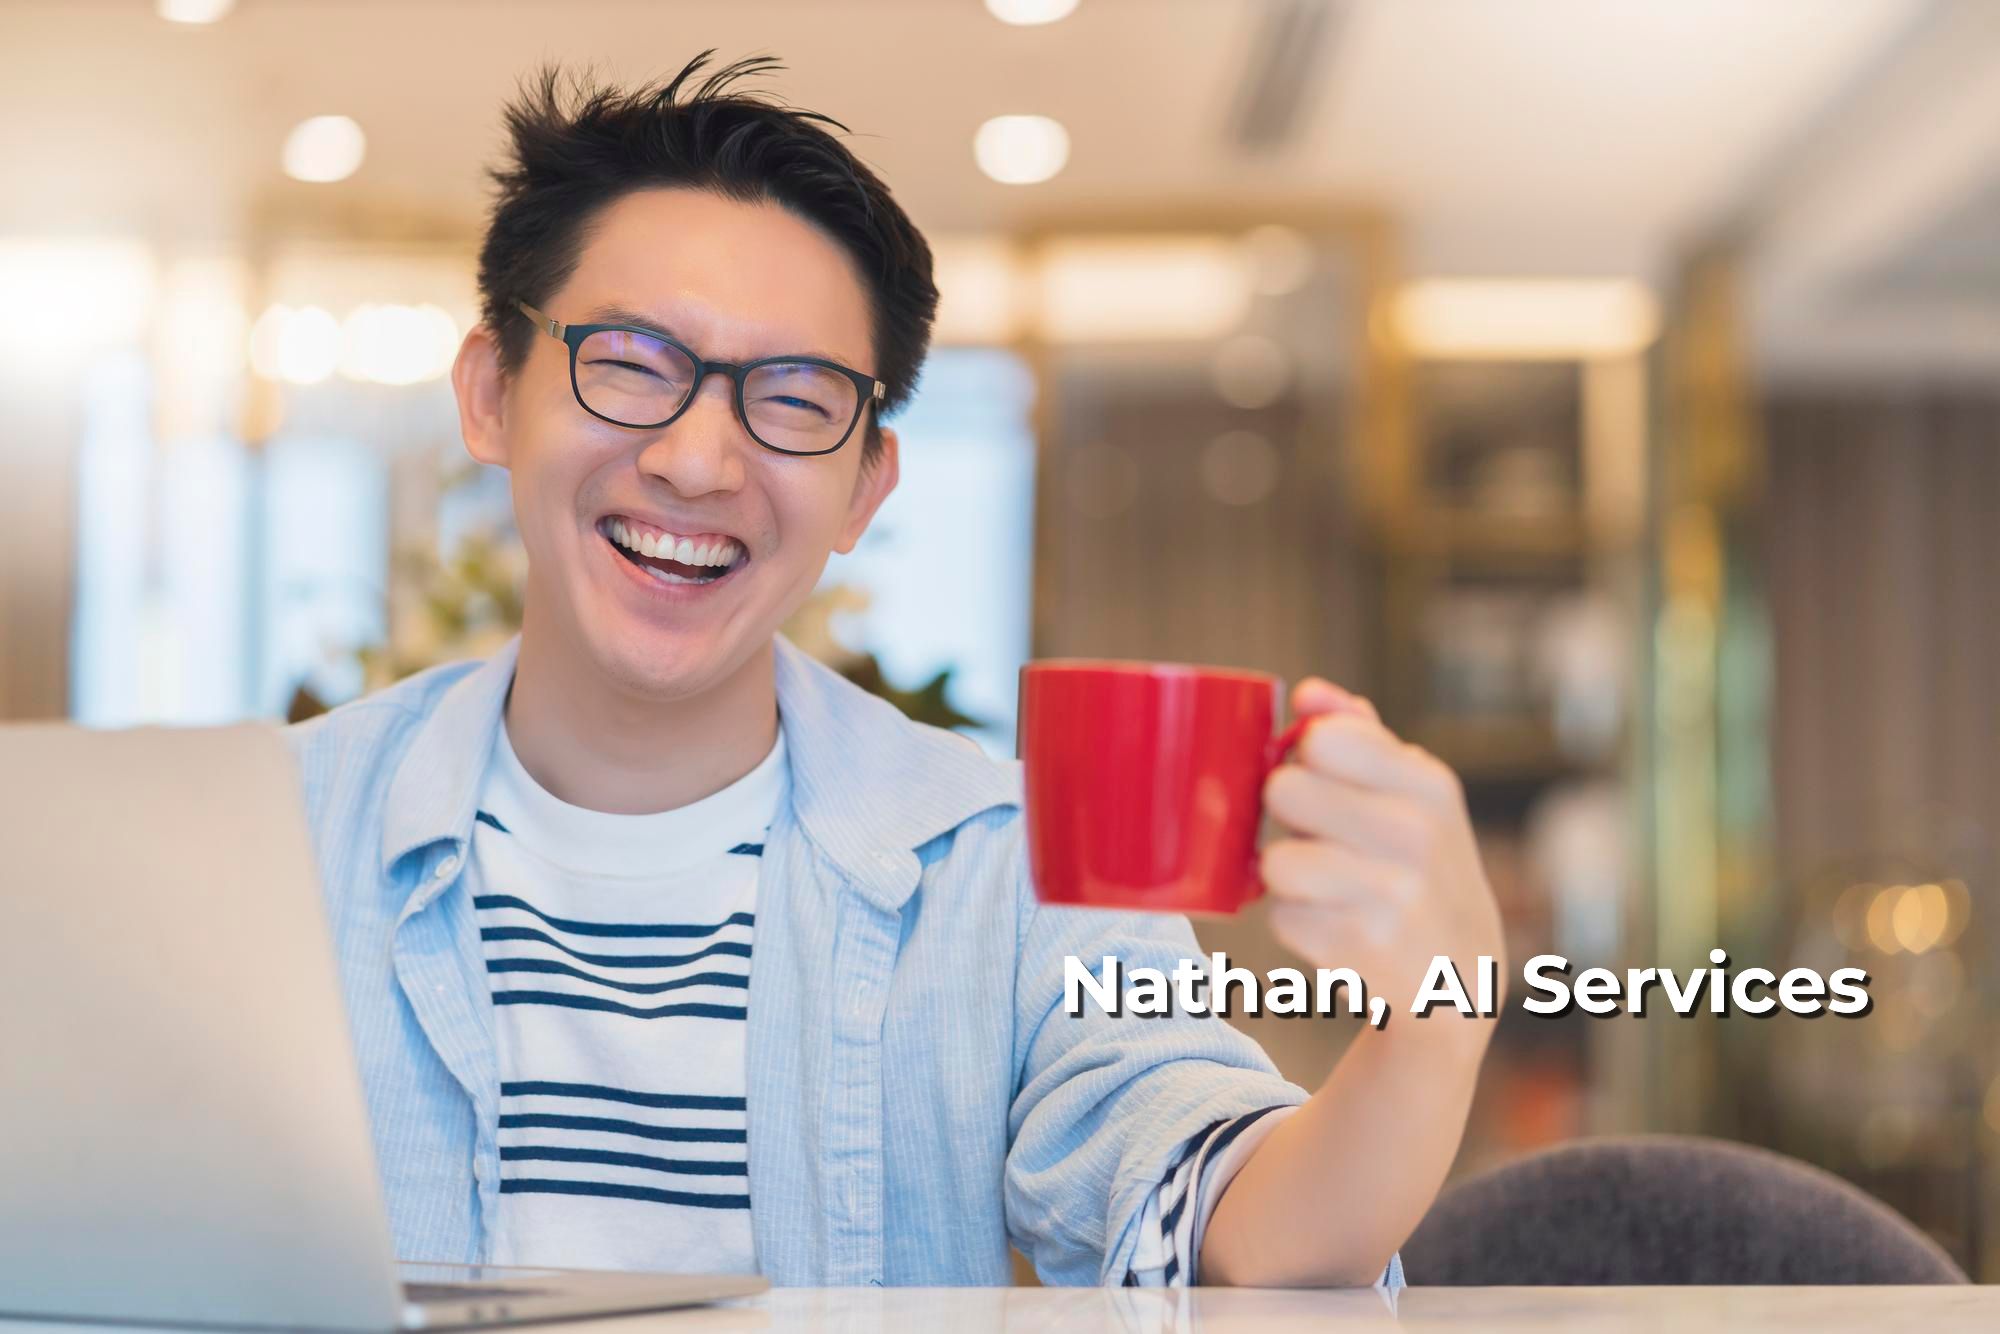 Nathan, AI Services